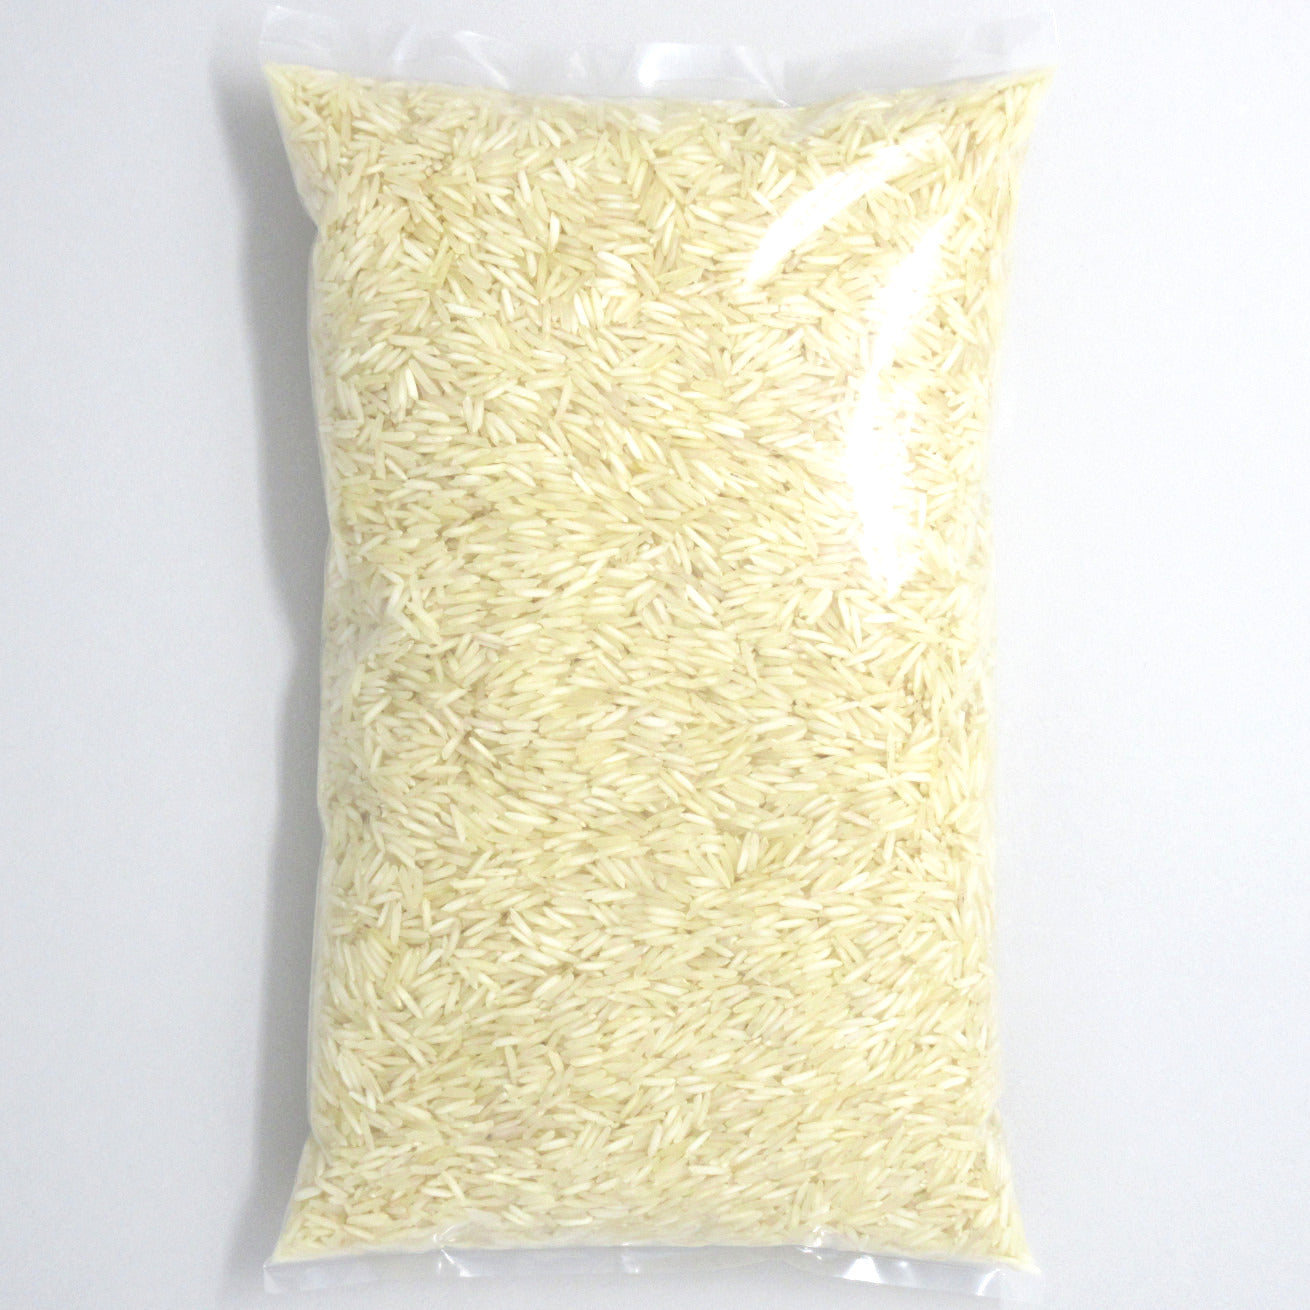 Flour Barrel product image - Basmati Rice